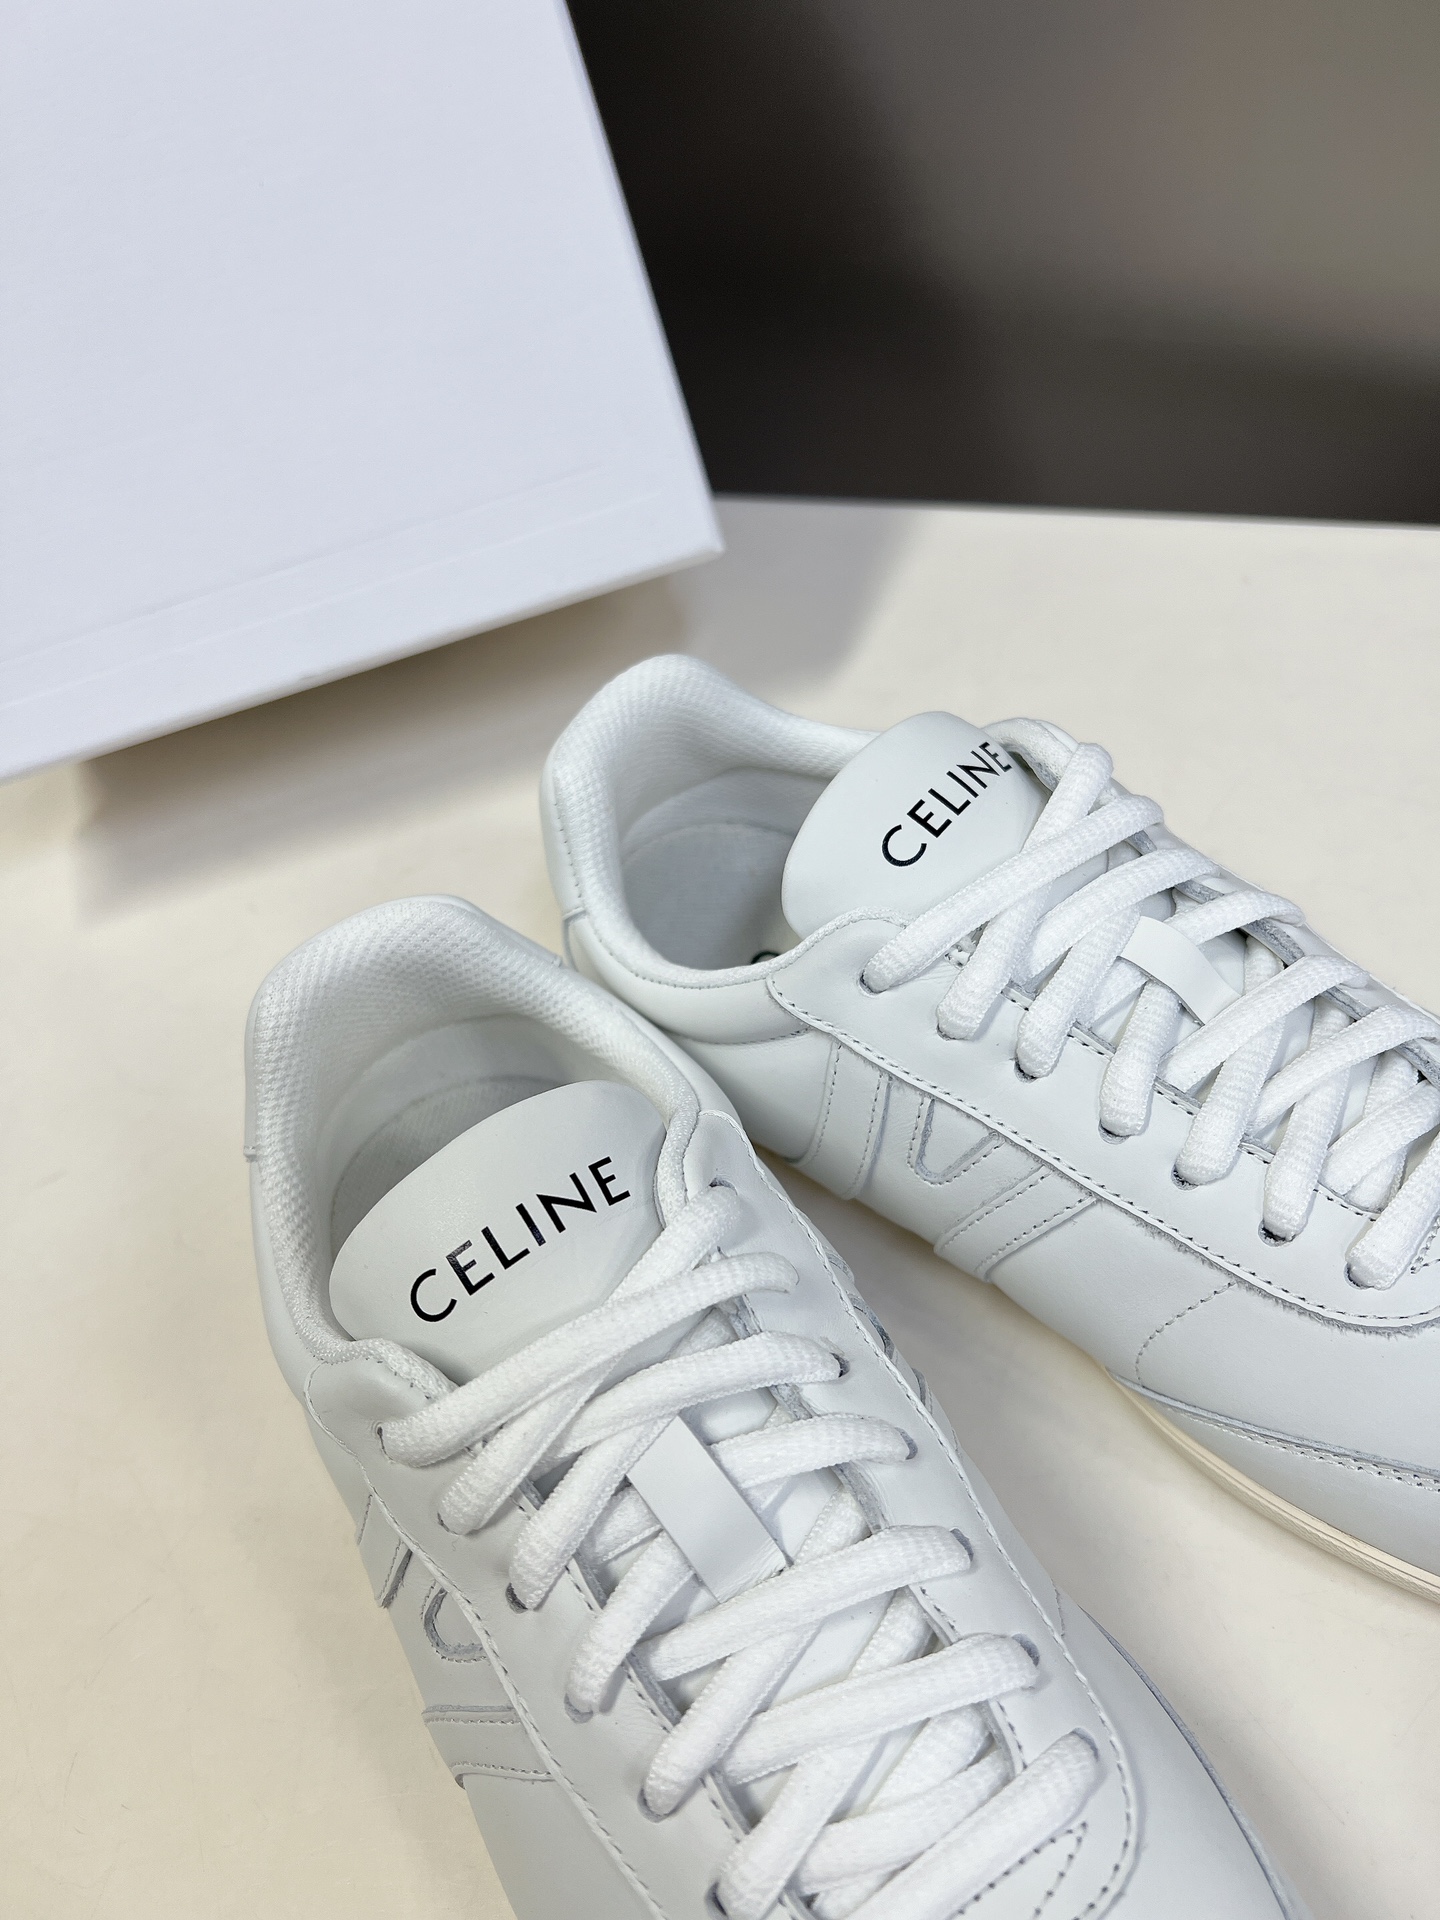 Celine思琳新款休闲鞋德训运动鞋小白鞋专柜7000RMB购入开发充满街头感的一双鞋子最新大C设计非常